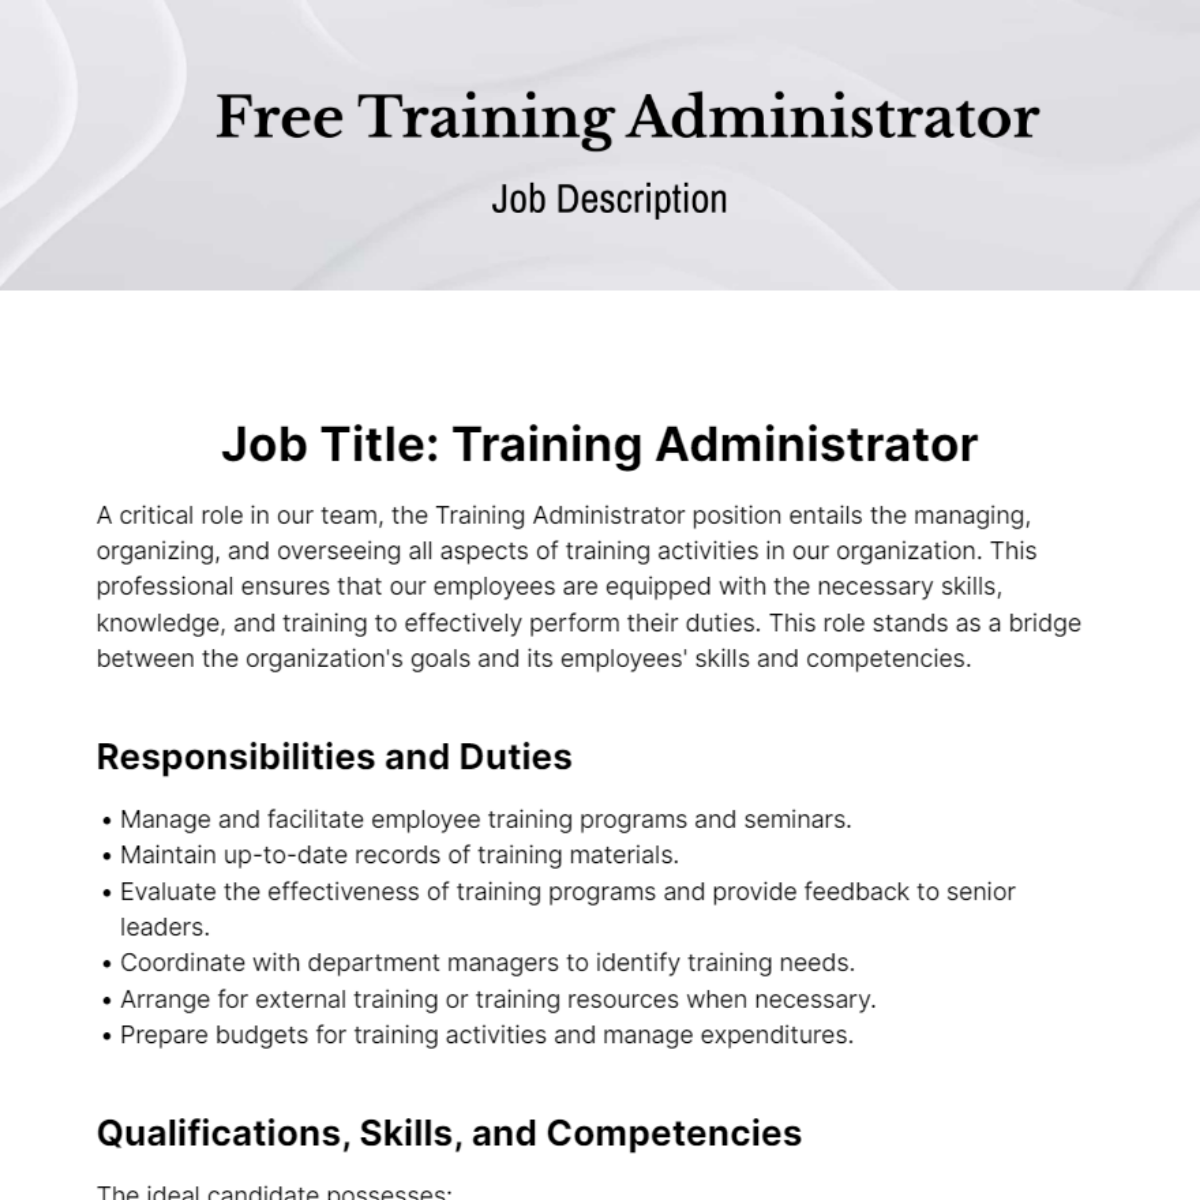 Free Training Administrator Job Description Template